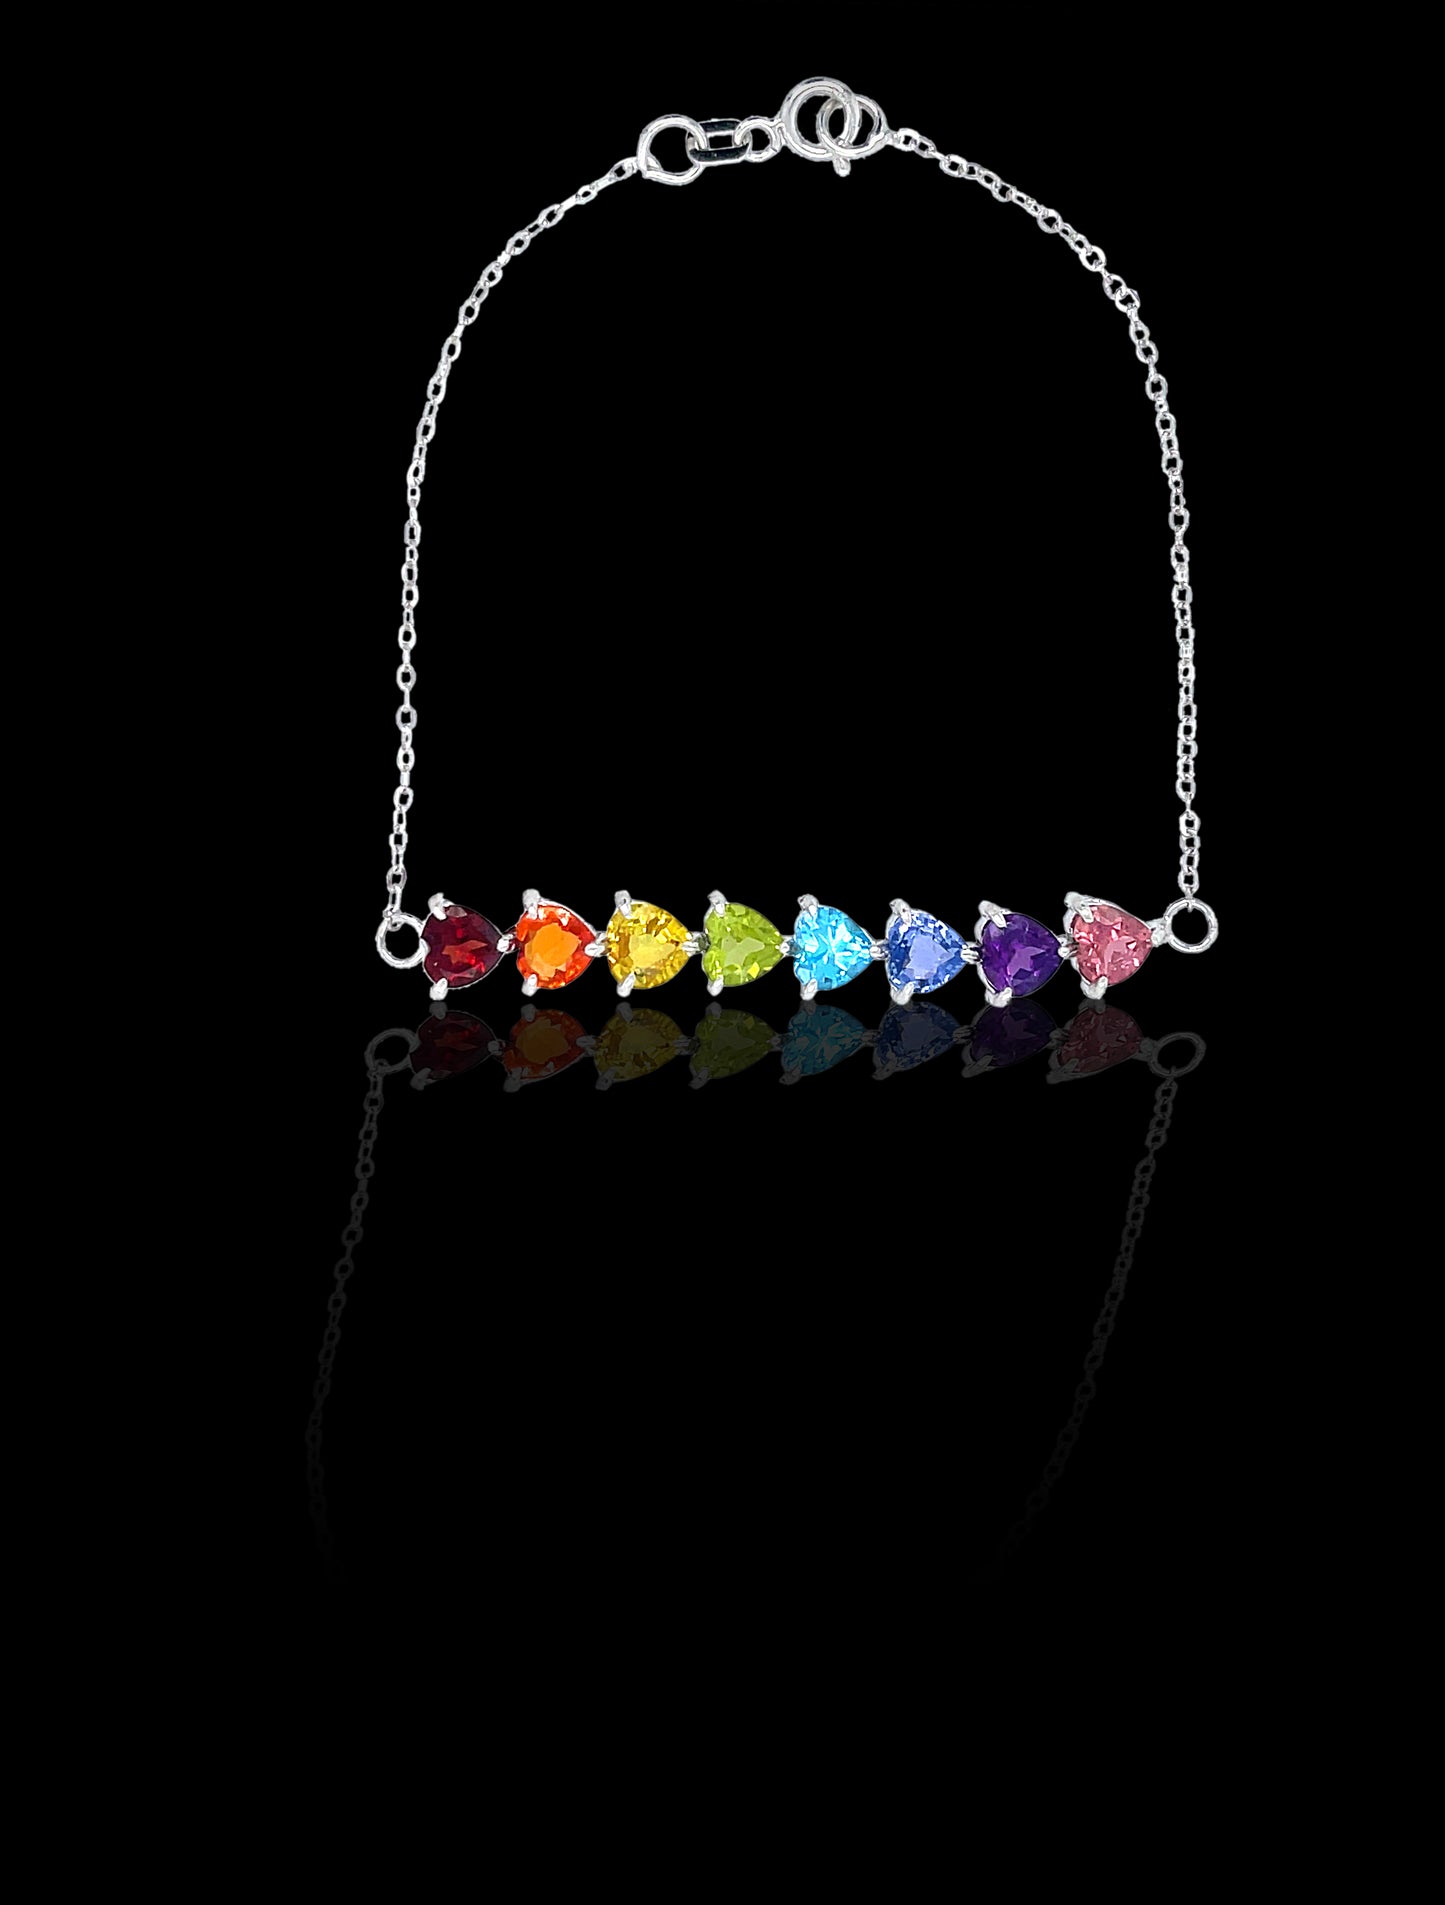 One Rainbow heart chain bracelet